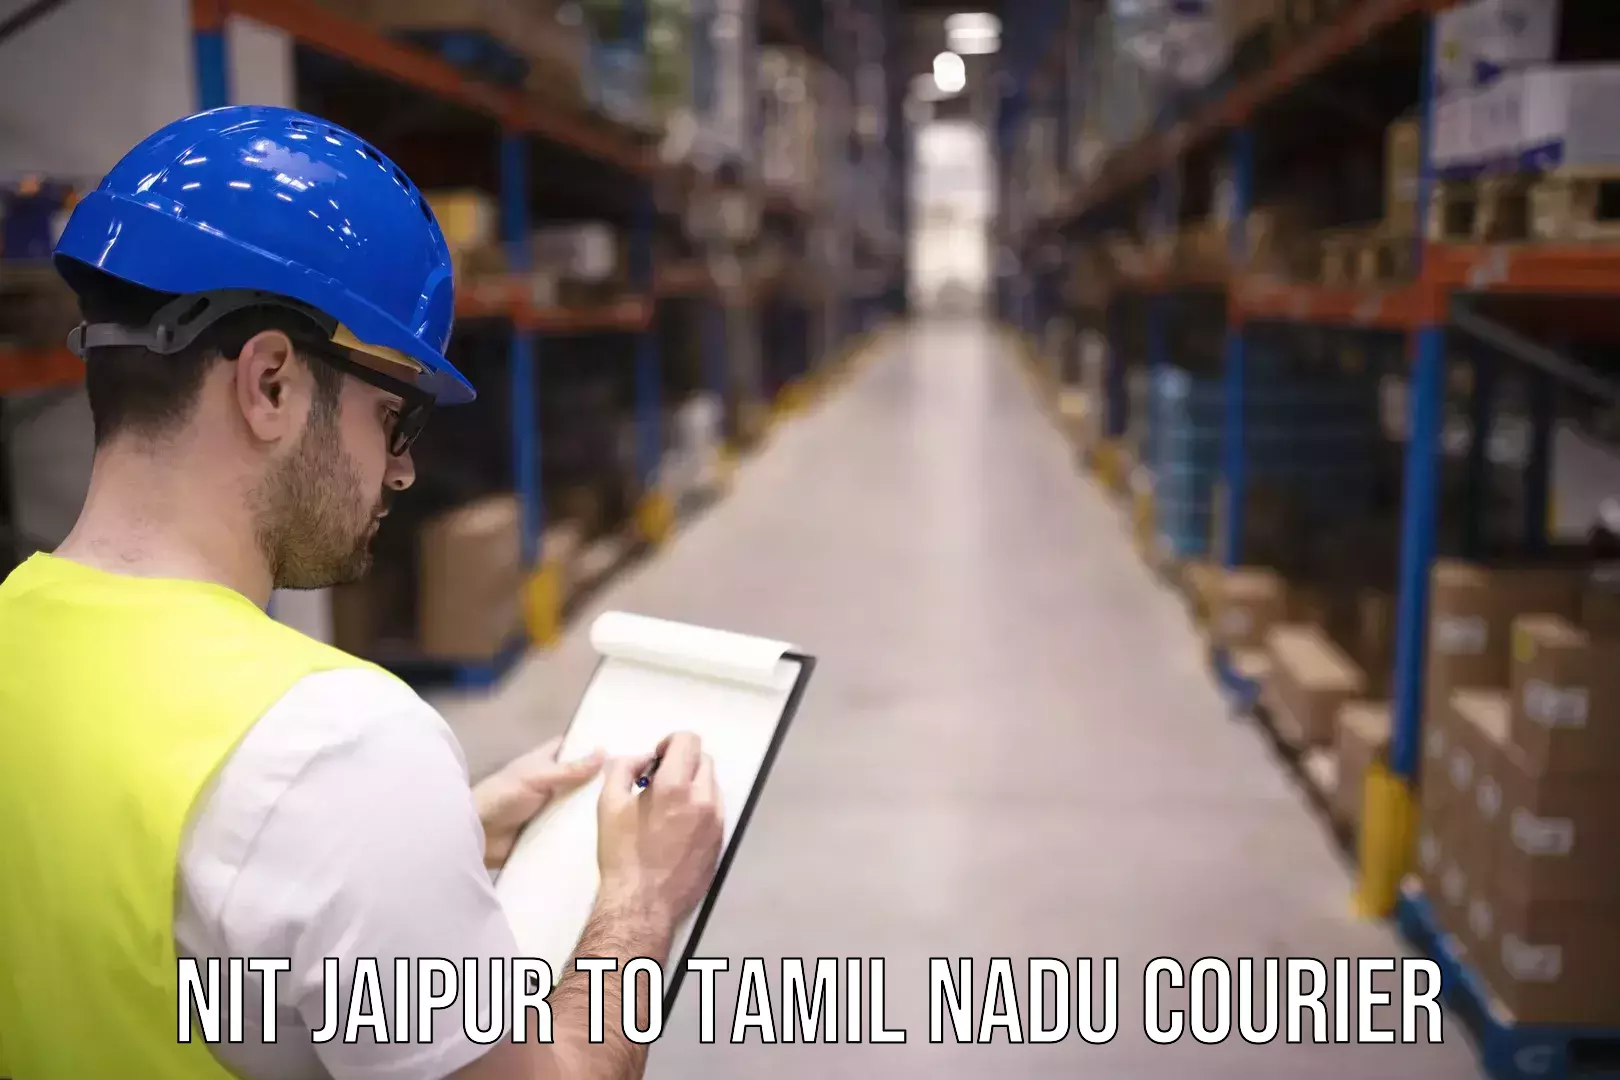 Speedy delivery service NIT Jaipur to Tamil Nadu